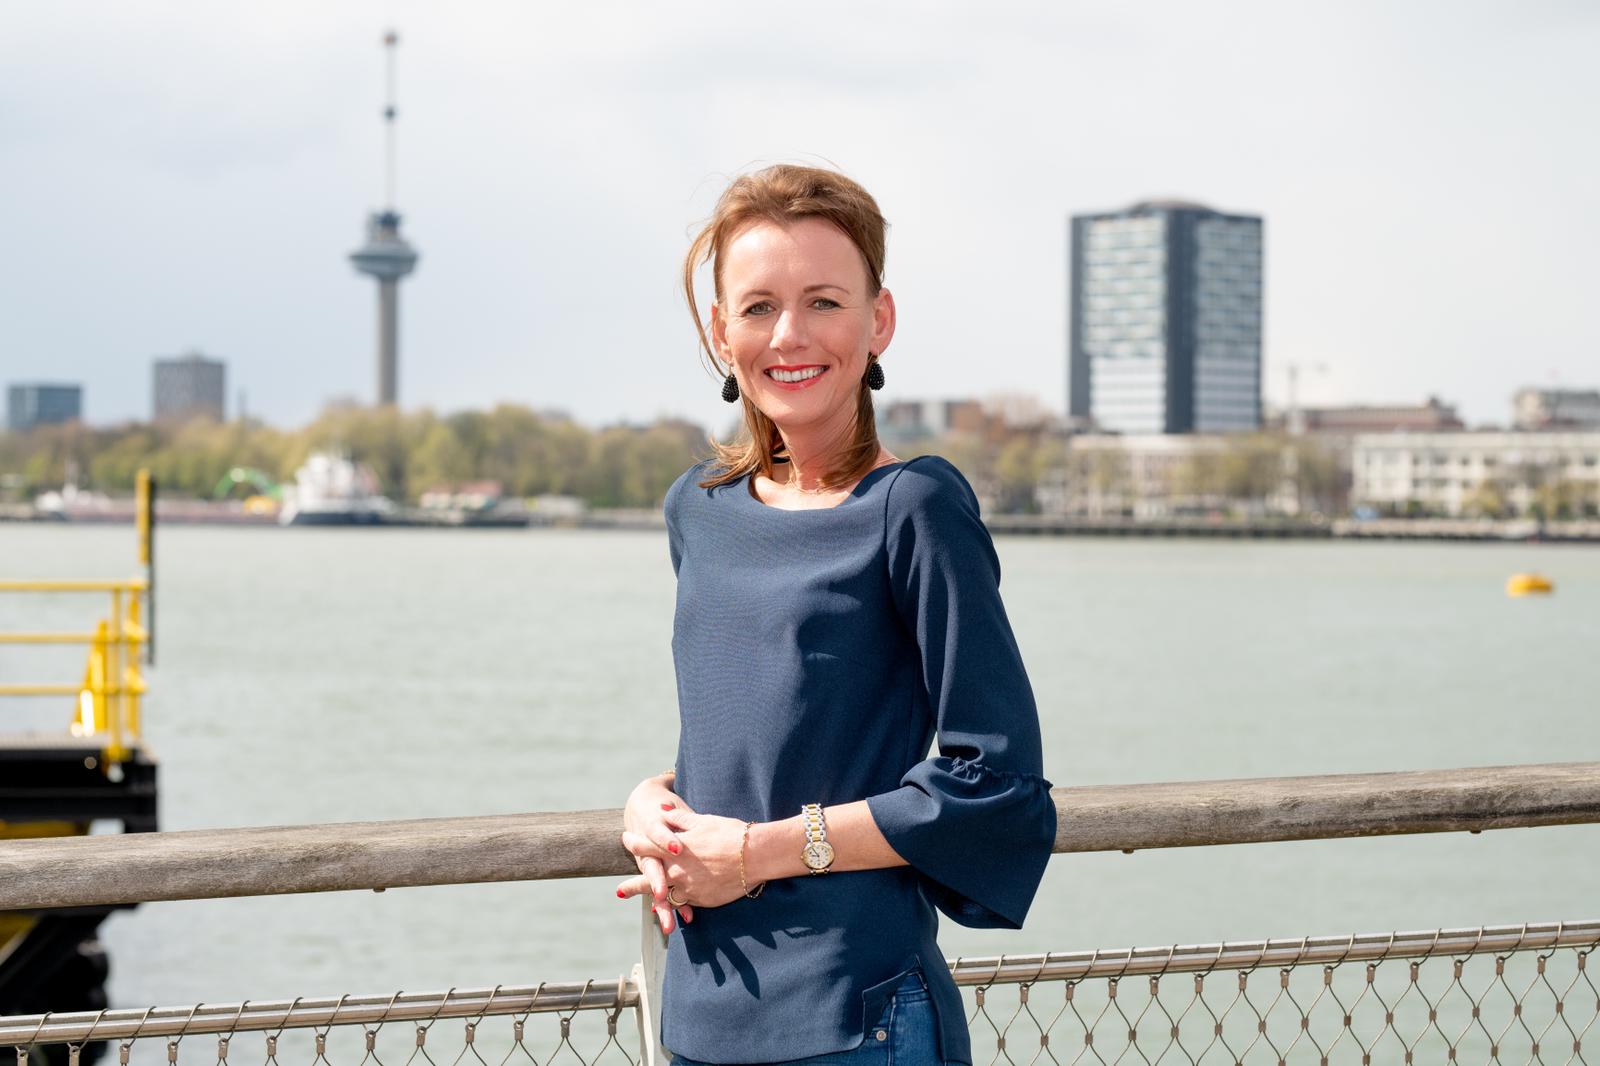 VVD-Europarlementariër Caroline Nagtegaal: ‘Giftige stoffen horen niet in de buitenlucht.’ (Foto VVD)